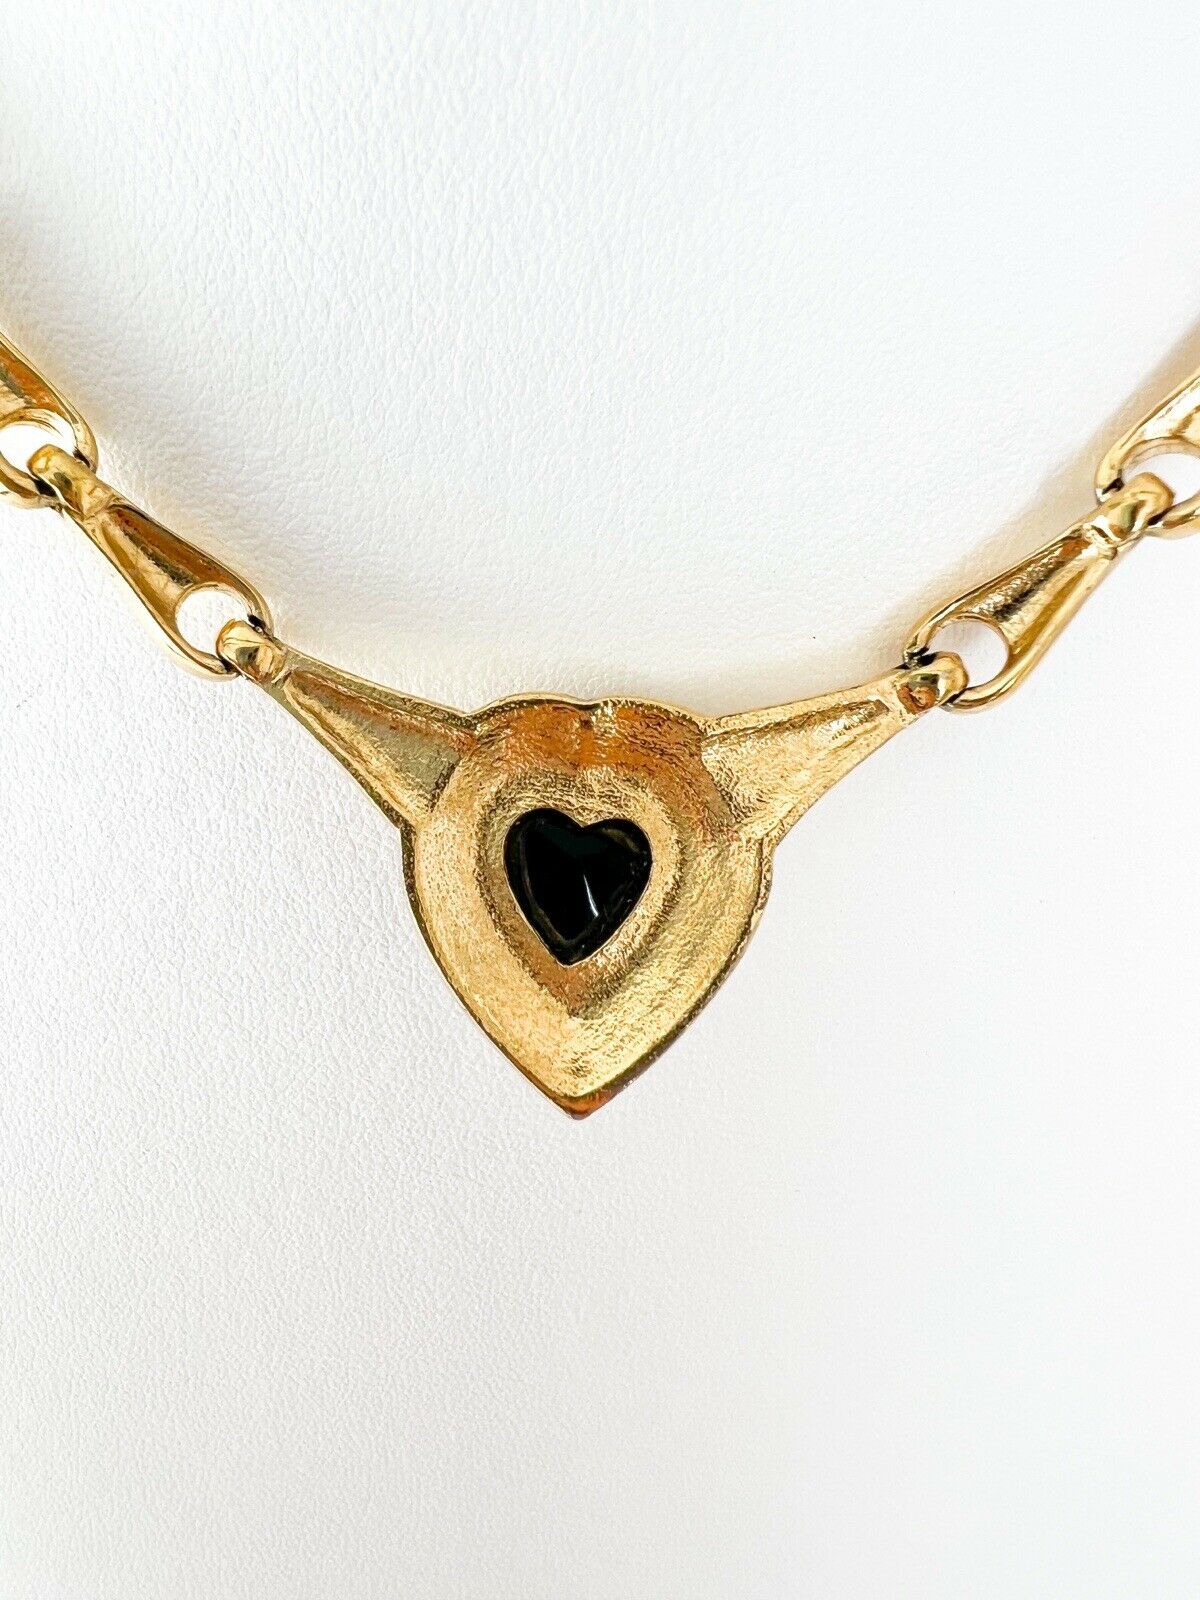 Nina Ricci Vintage Charm Necklace Choker Gold